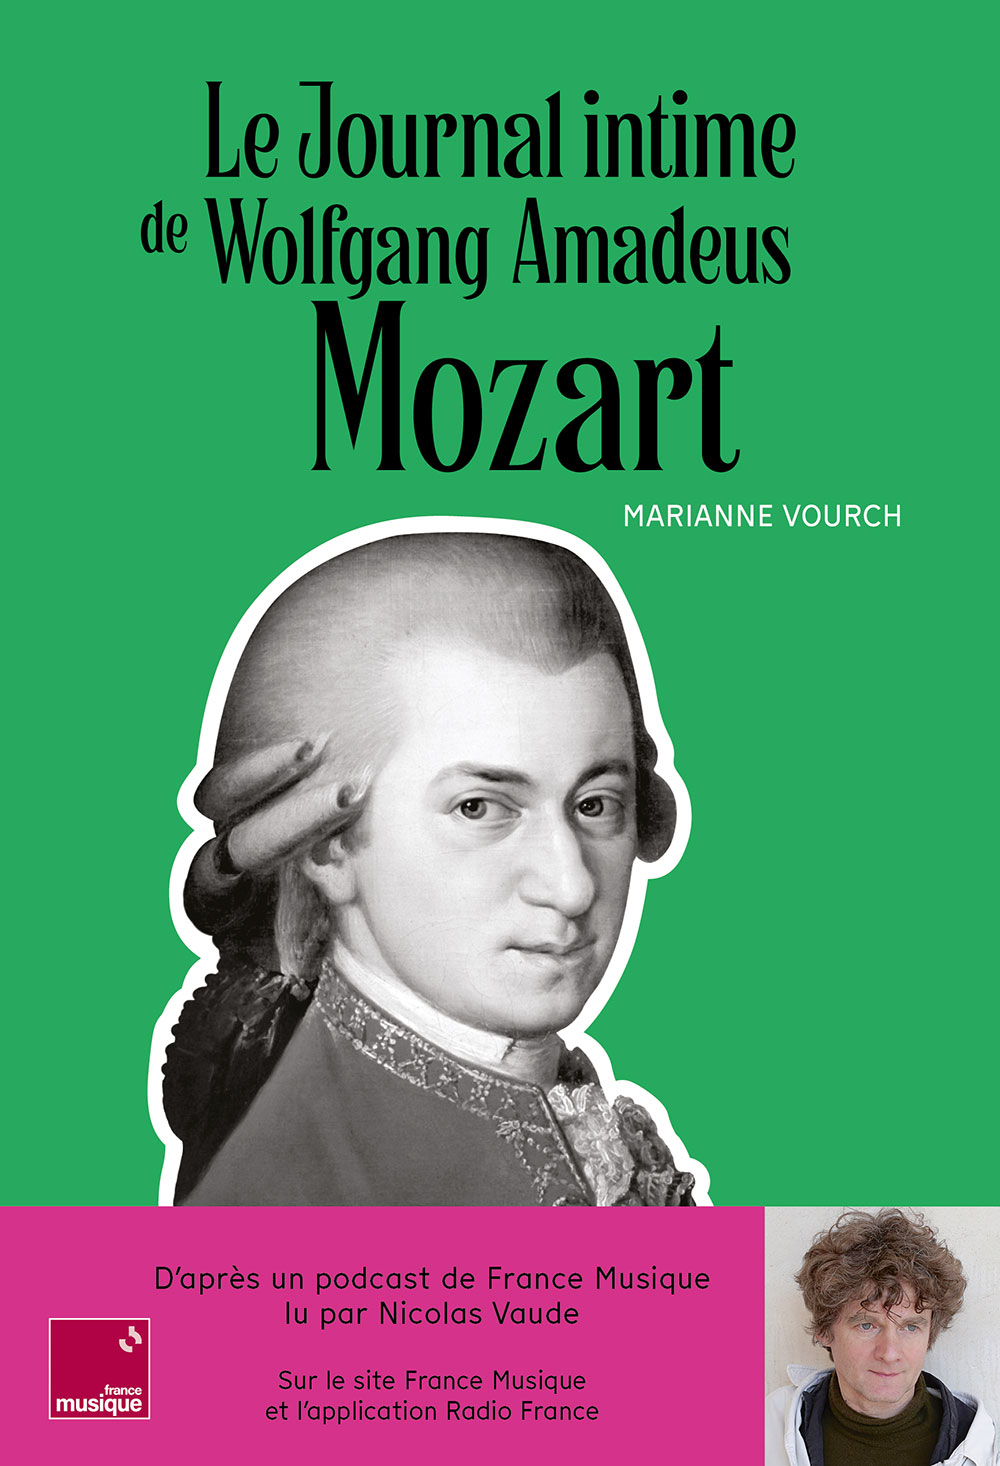 Le journal intime de Wolfgang Amadeus Mozart